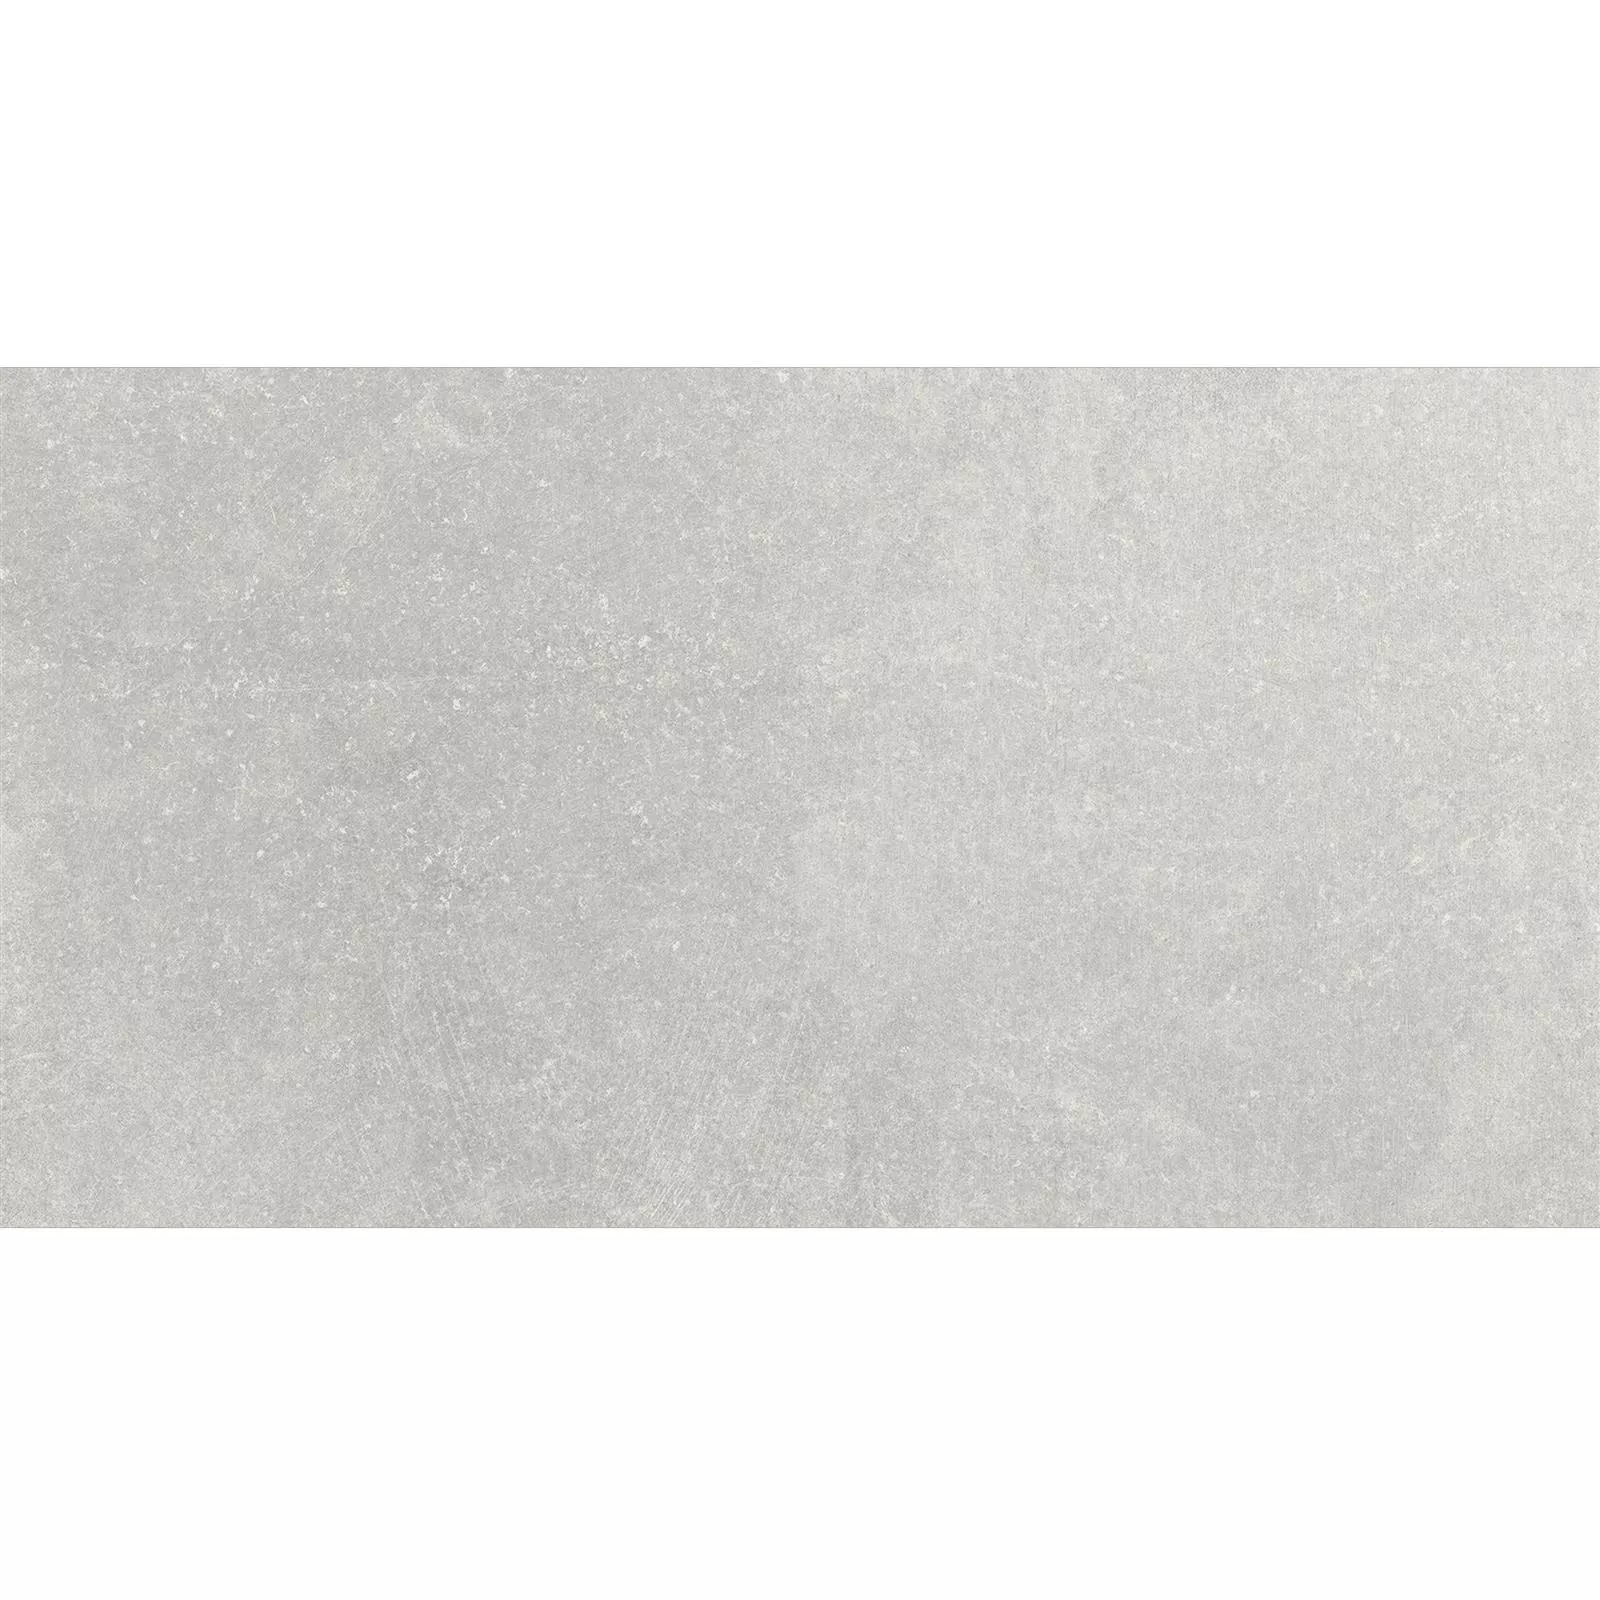 Bodenfliesen Steinoptik Horizon Grau 30x60cm